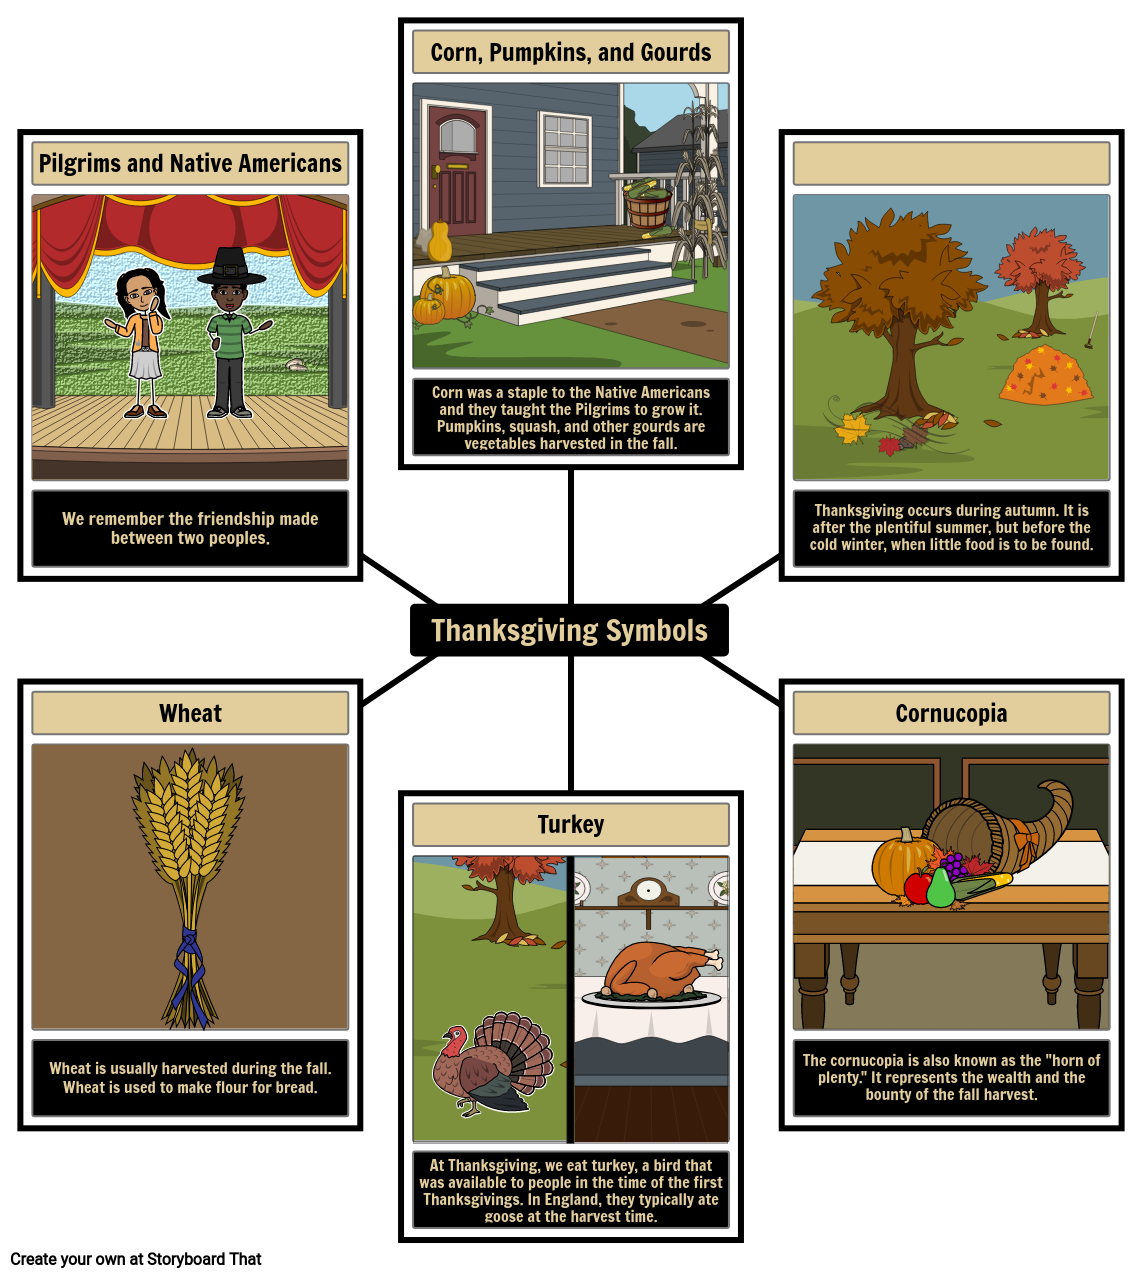 Thanksgiving - Symbols